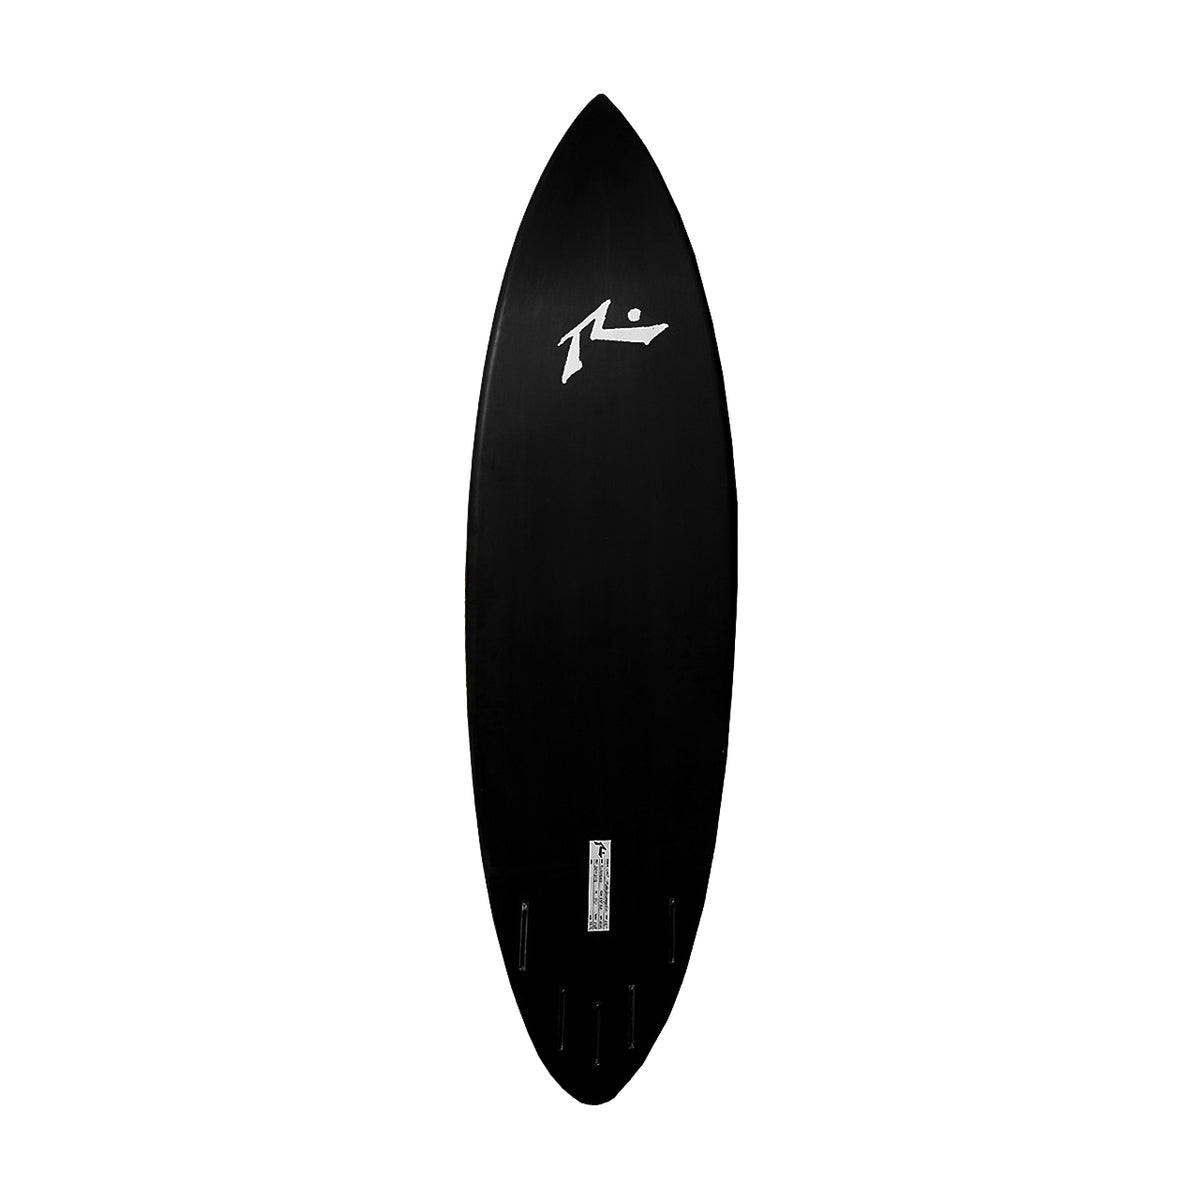 Black Blackbird Bottom View - Rusty Surfboards